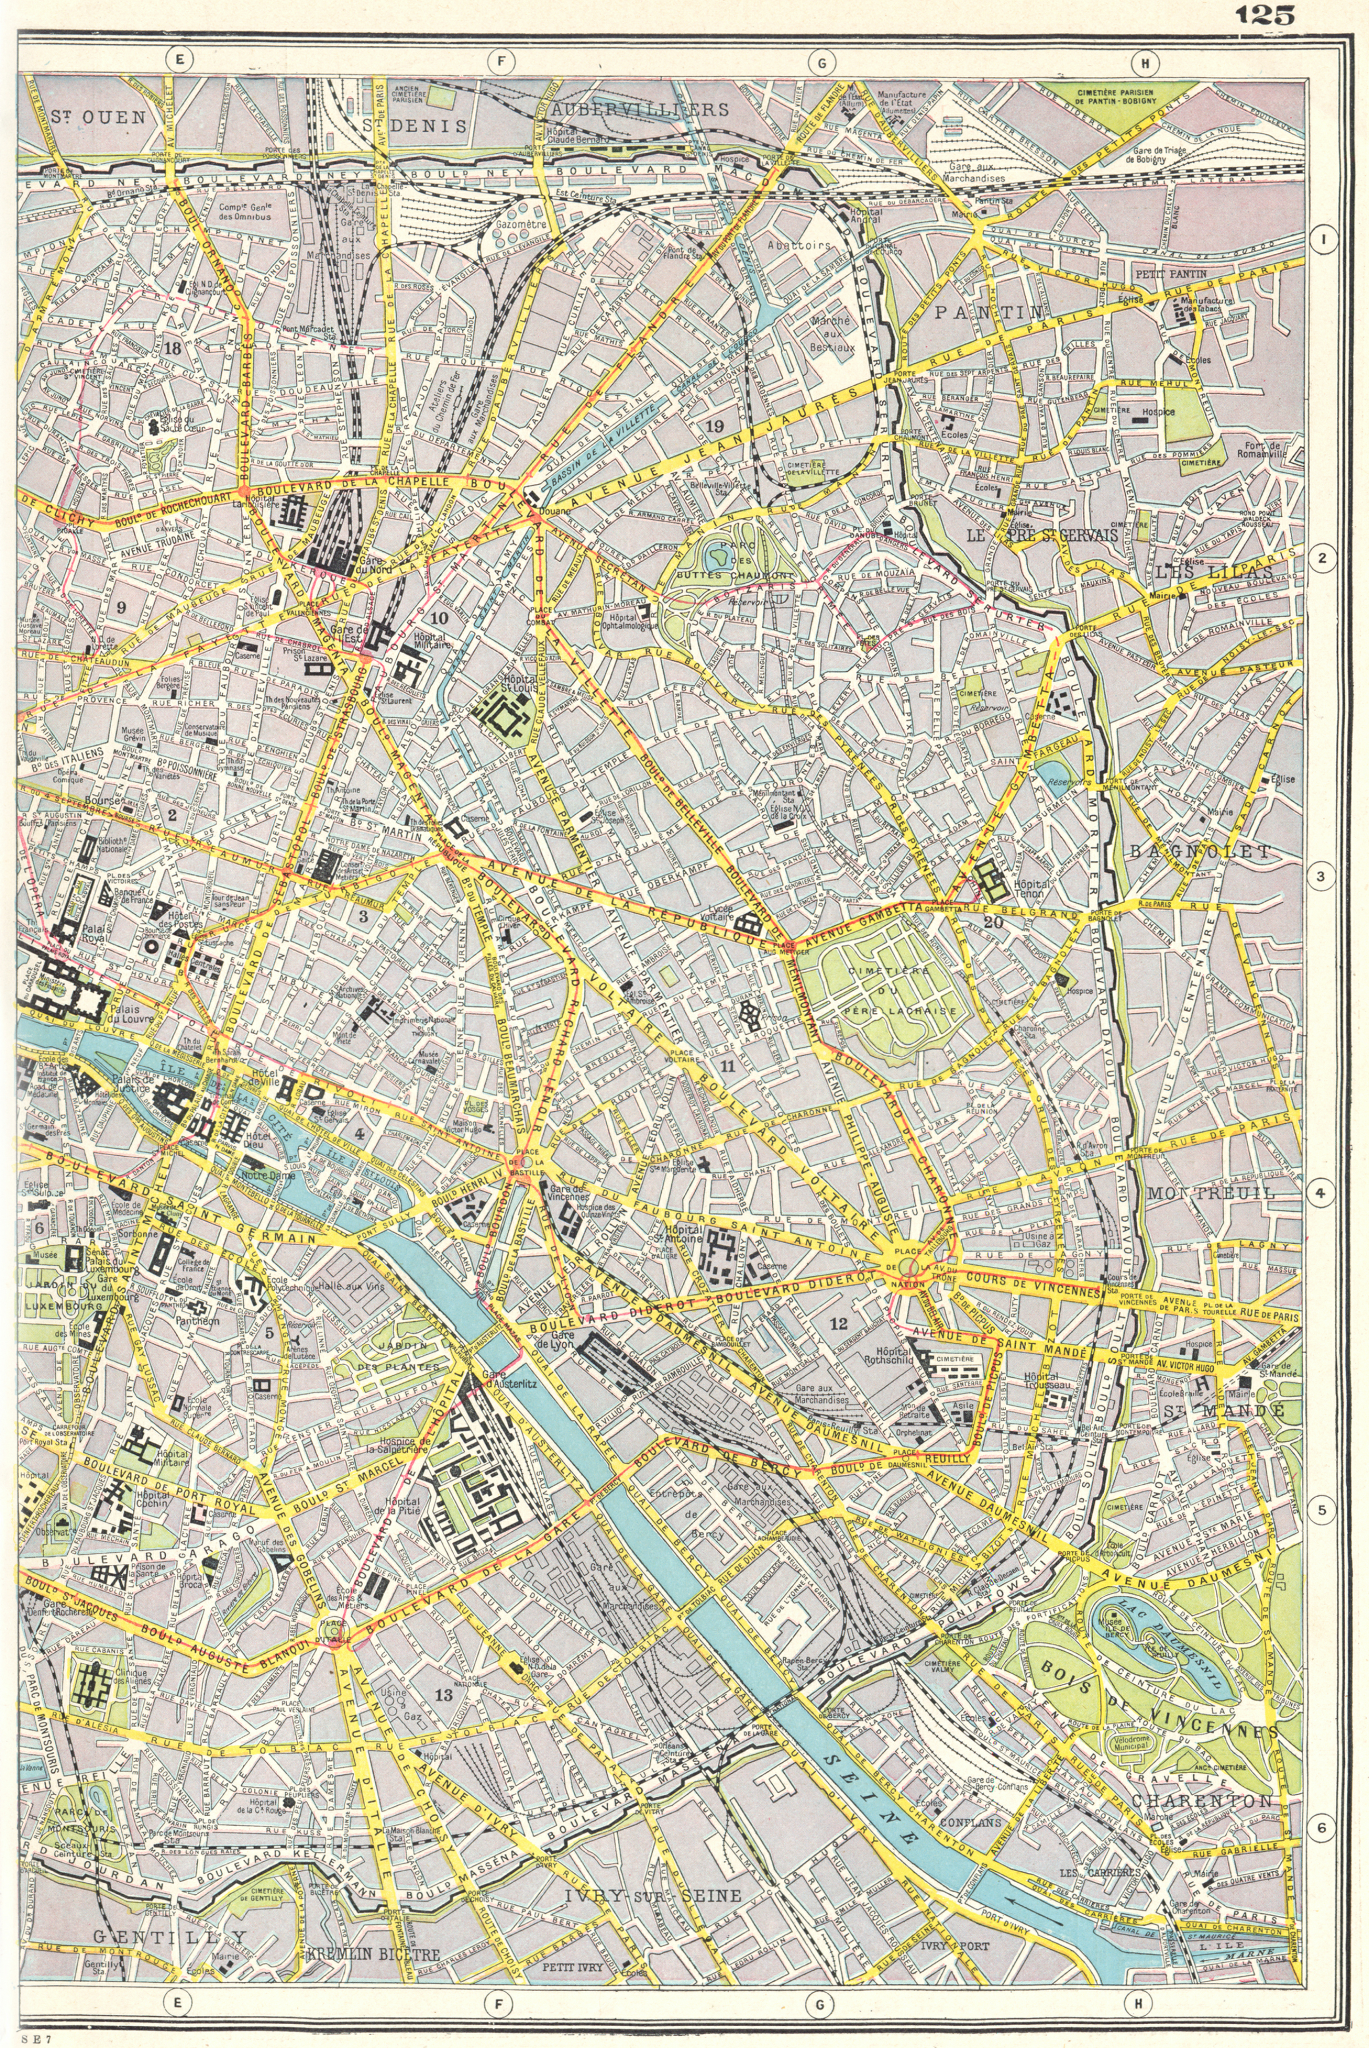 Associate Product PARIS EAST. Plan of Paris east sheet. HARMSWORTH 1920 old antique map chart